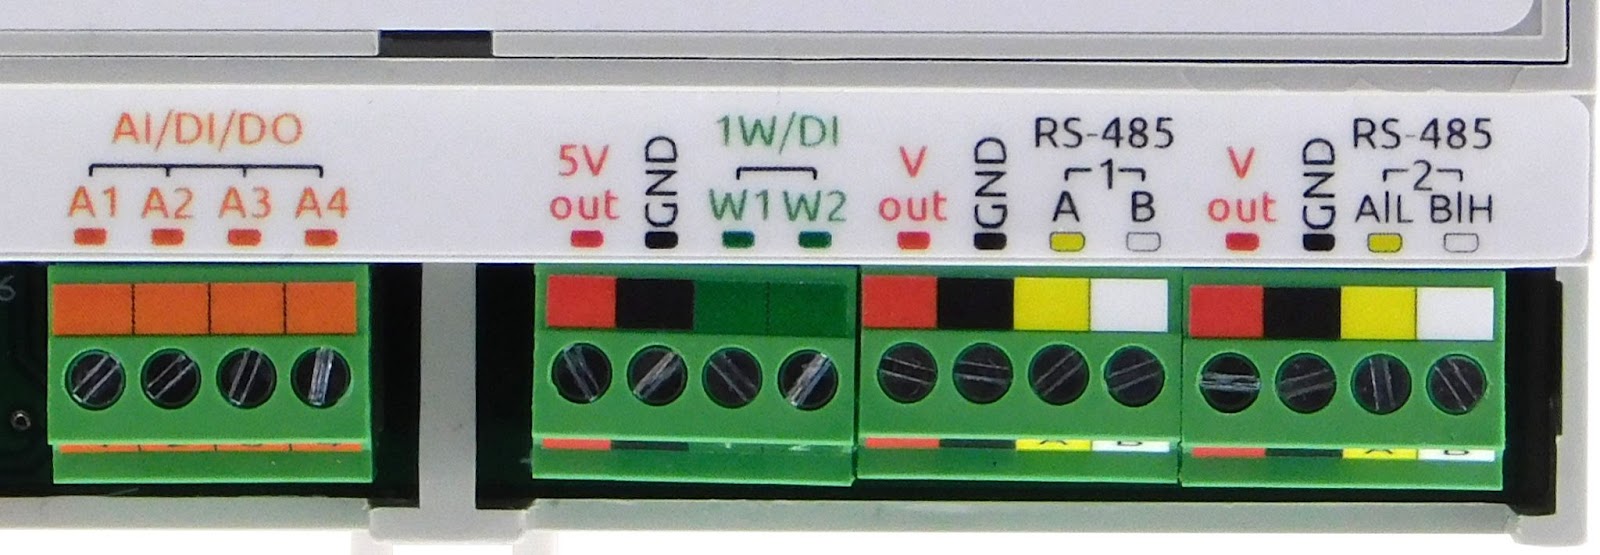 Клеммы RS-485 и выходы Vout в контроллерах Wiren Board